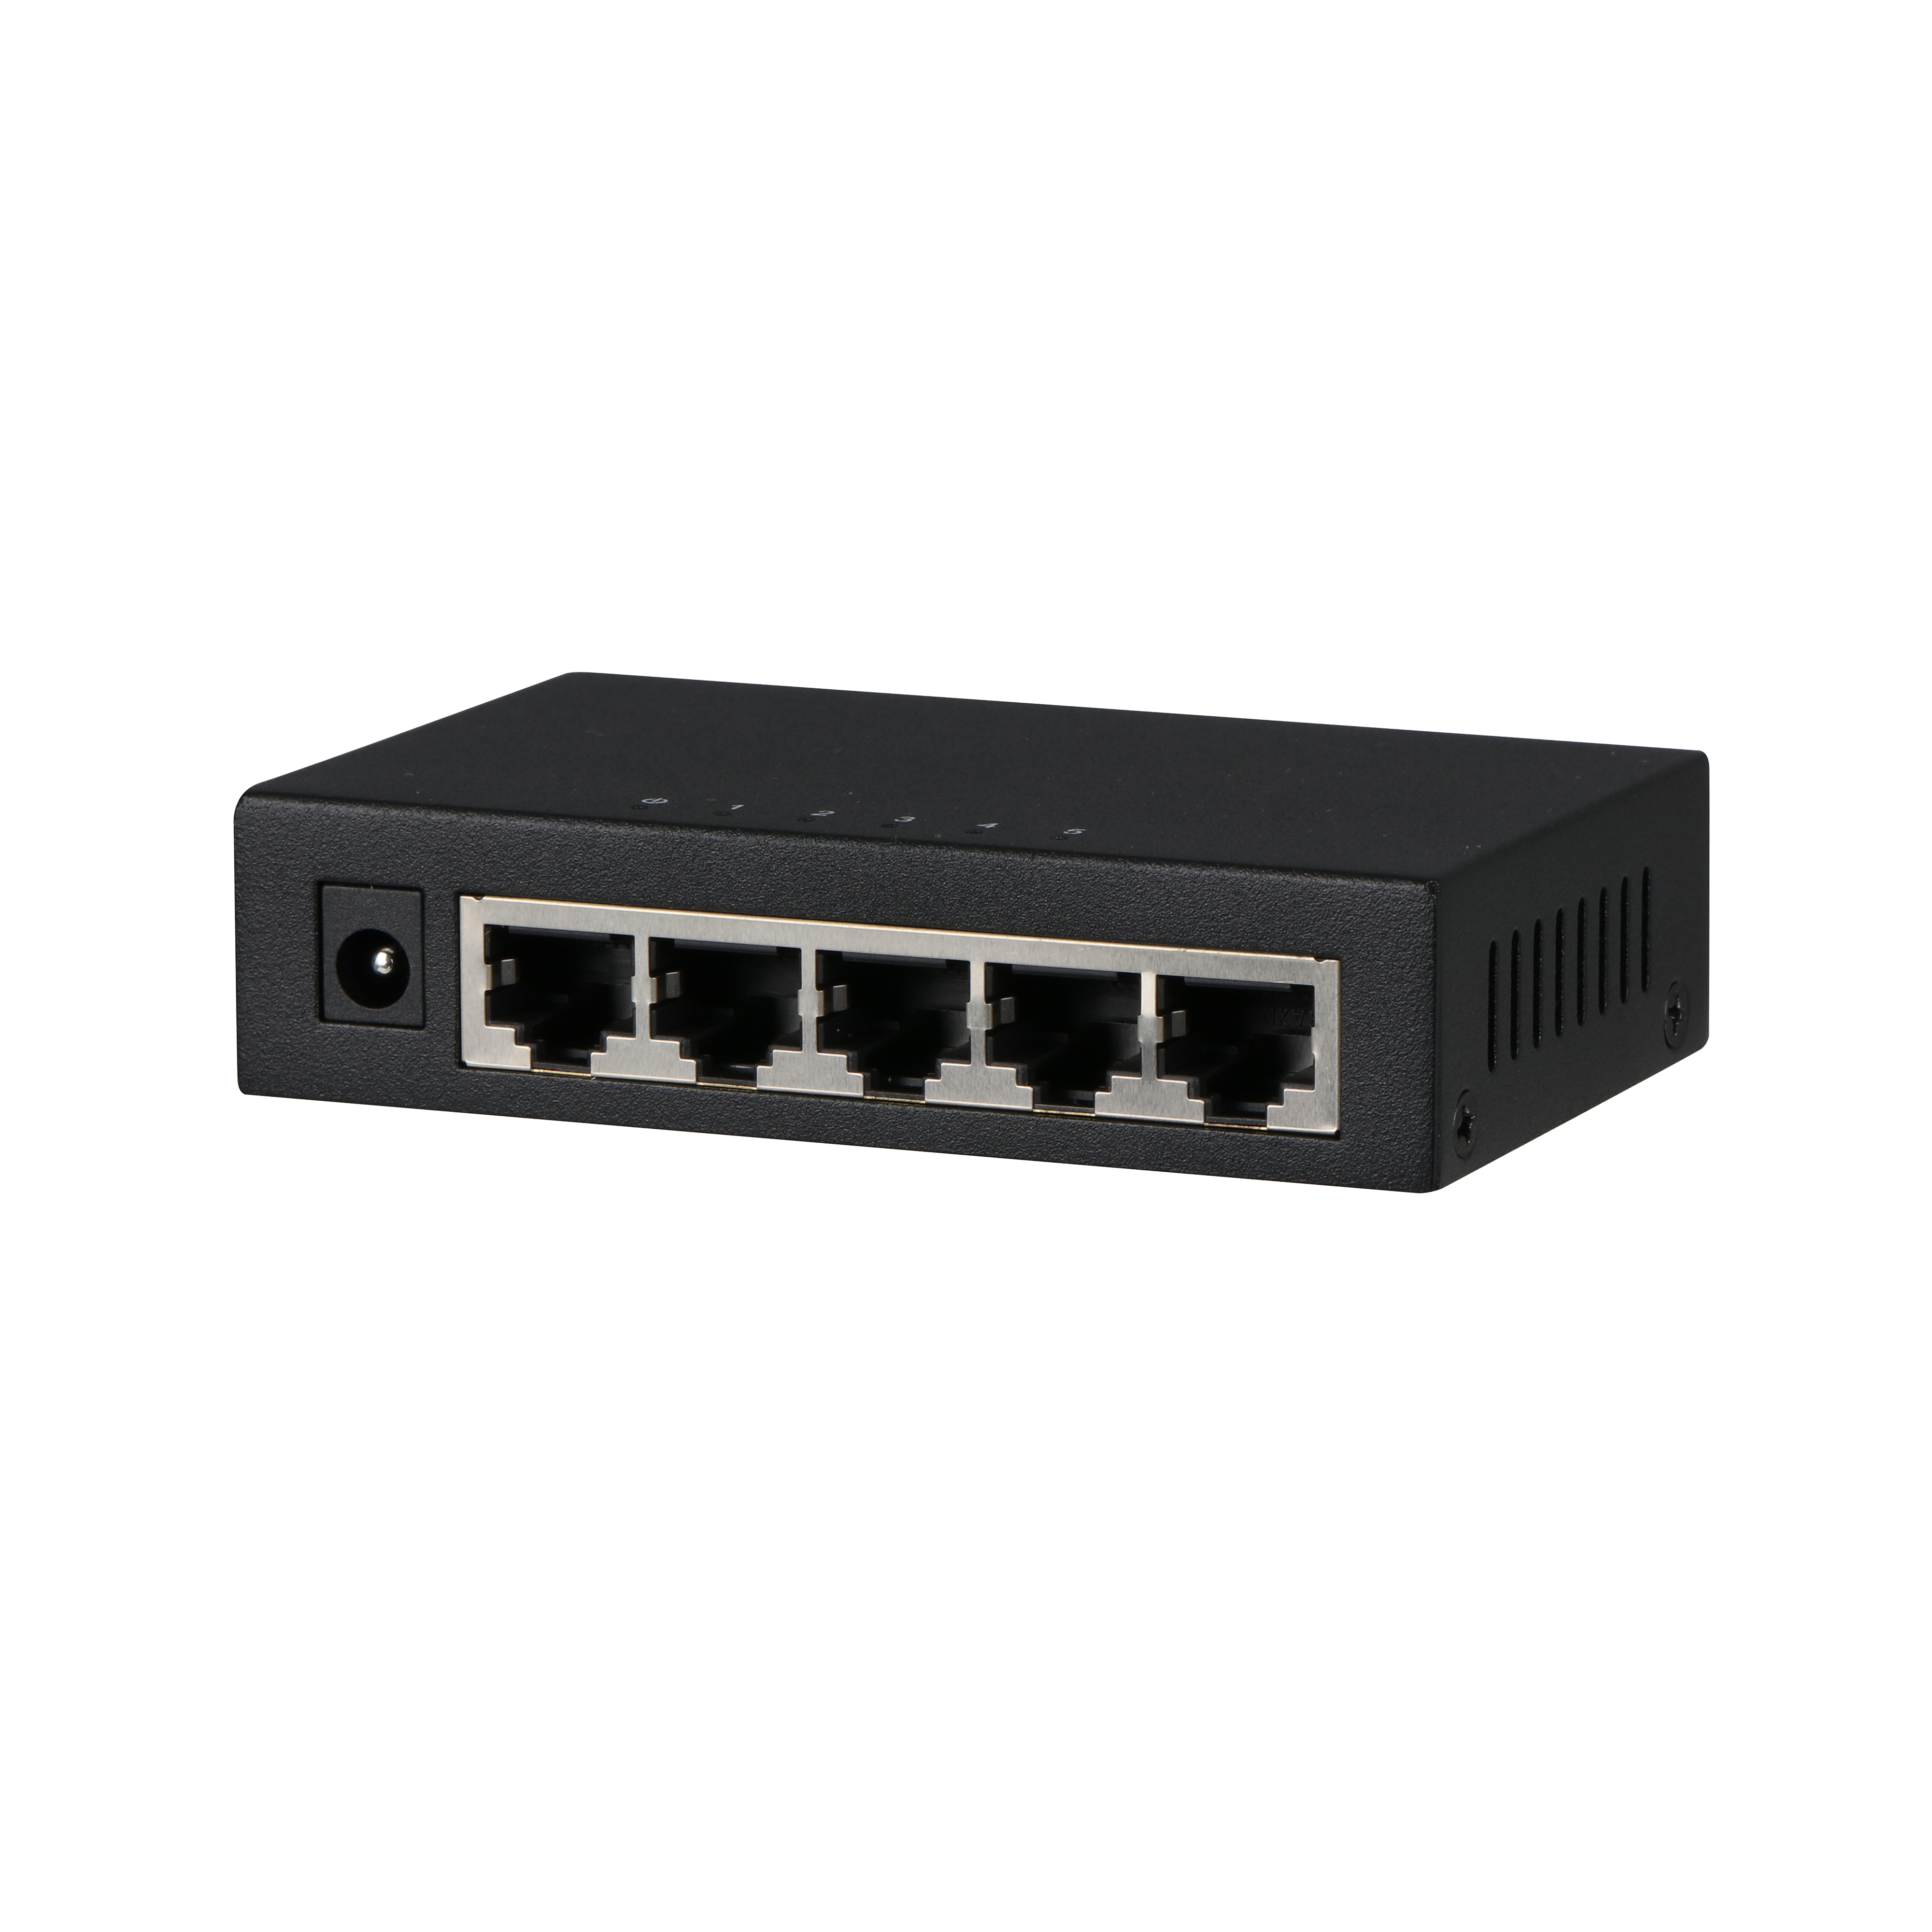 05-0030-05 5 Port Gigabit Ethernet Switch